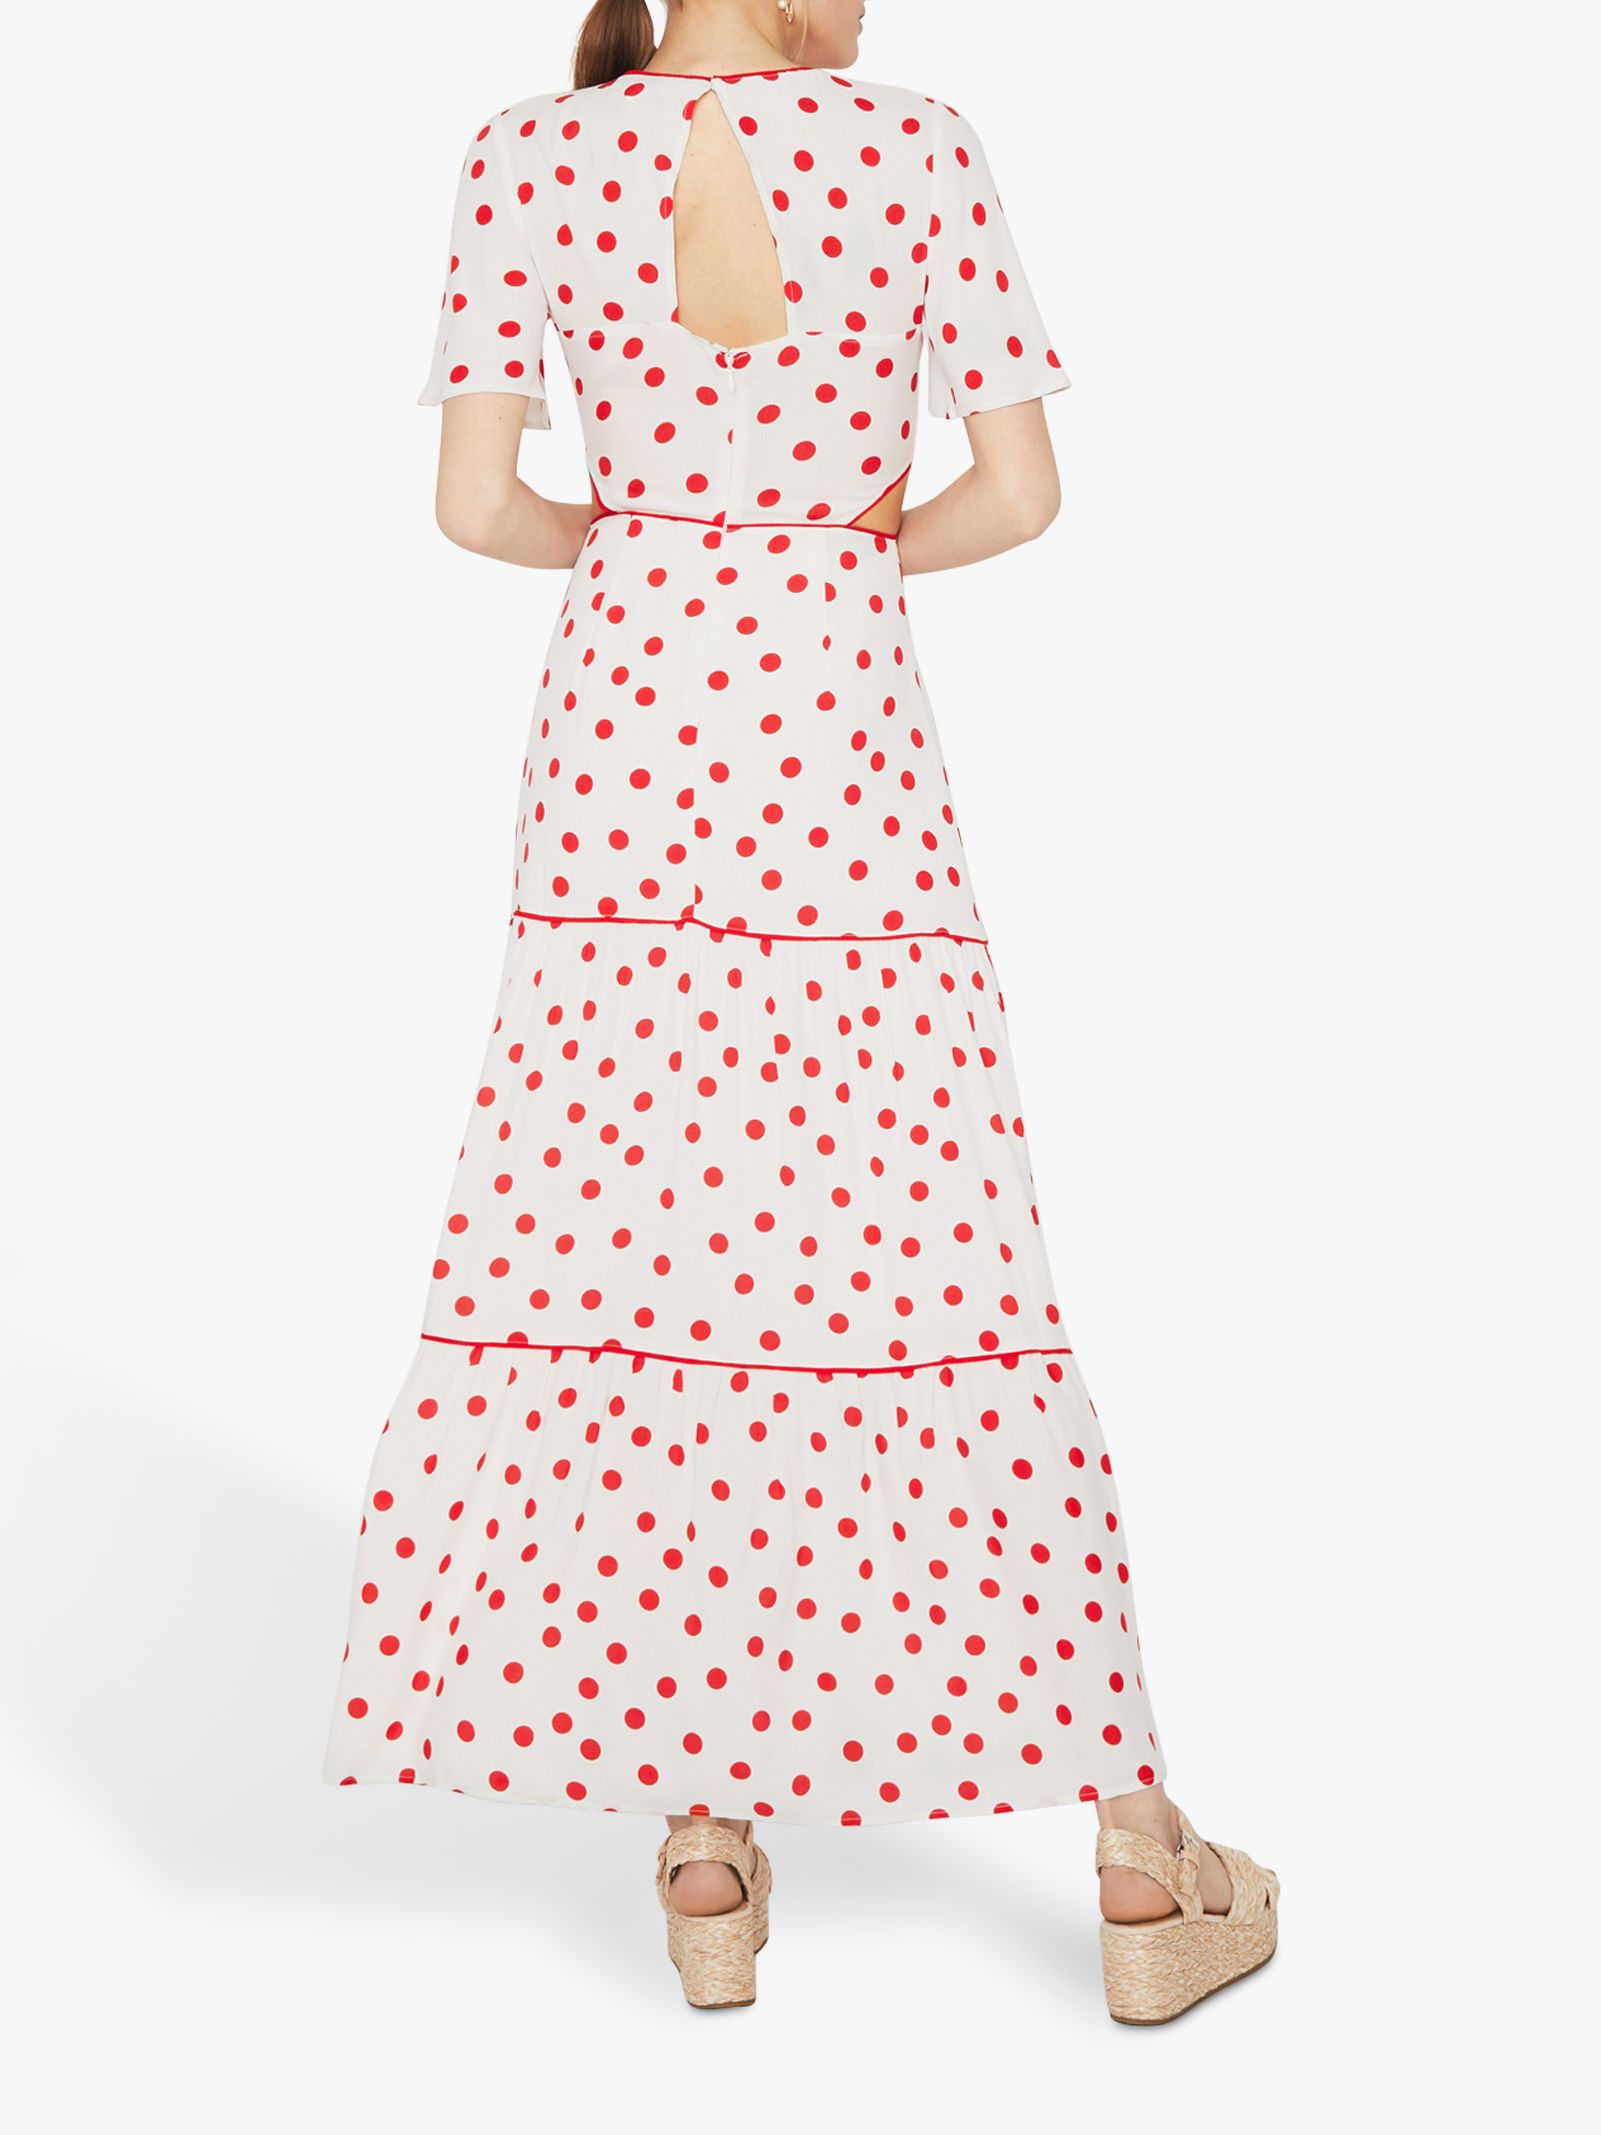 warehouse red polka dot dress